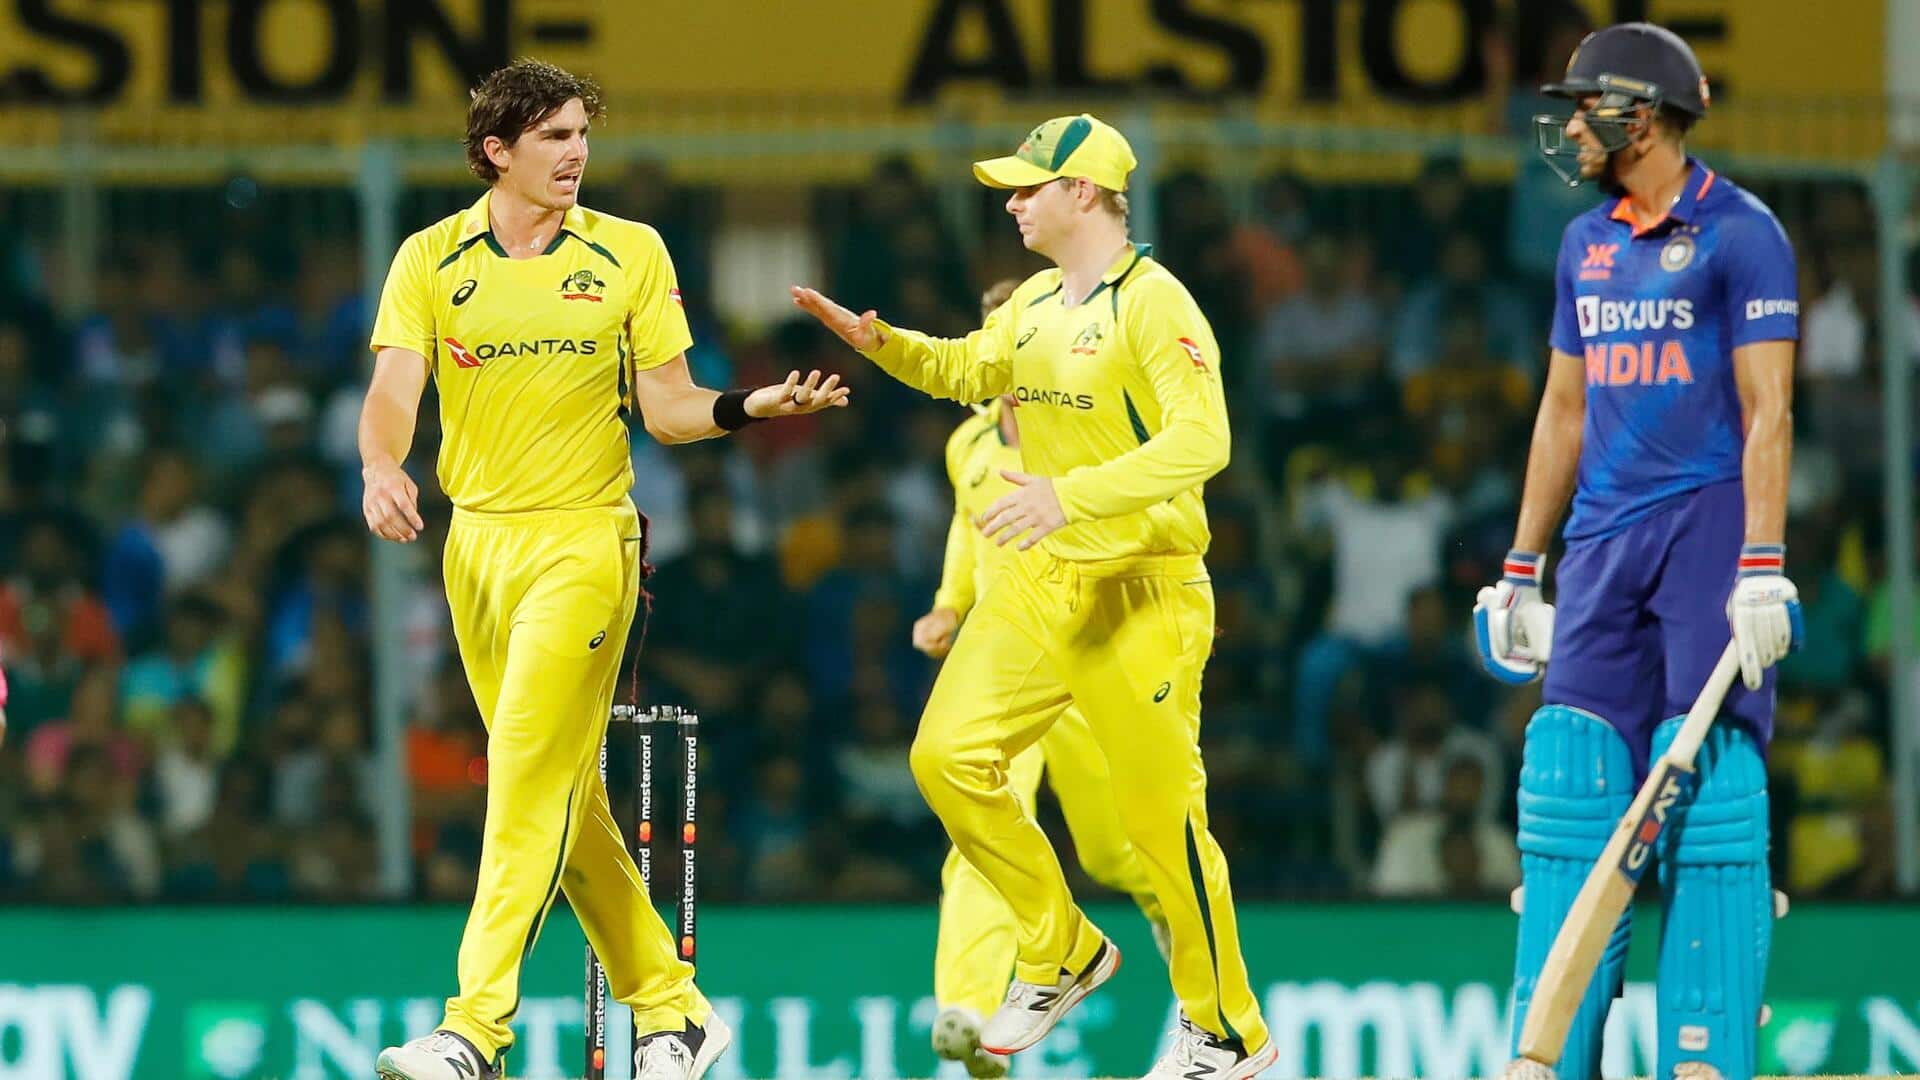 Sean Abbott picked in Australia's ICC World Cup squad: Stats